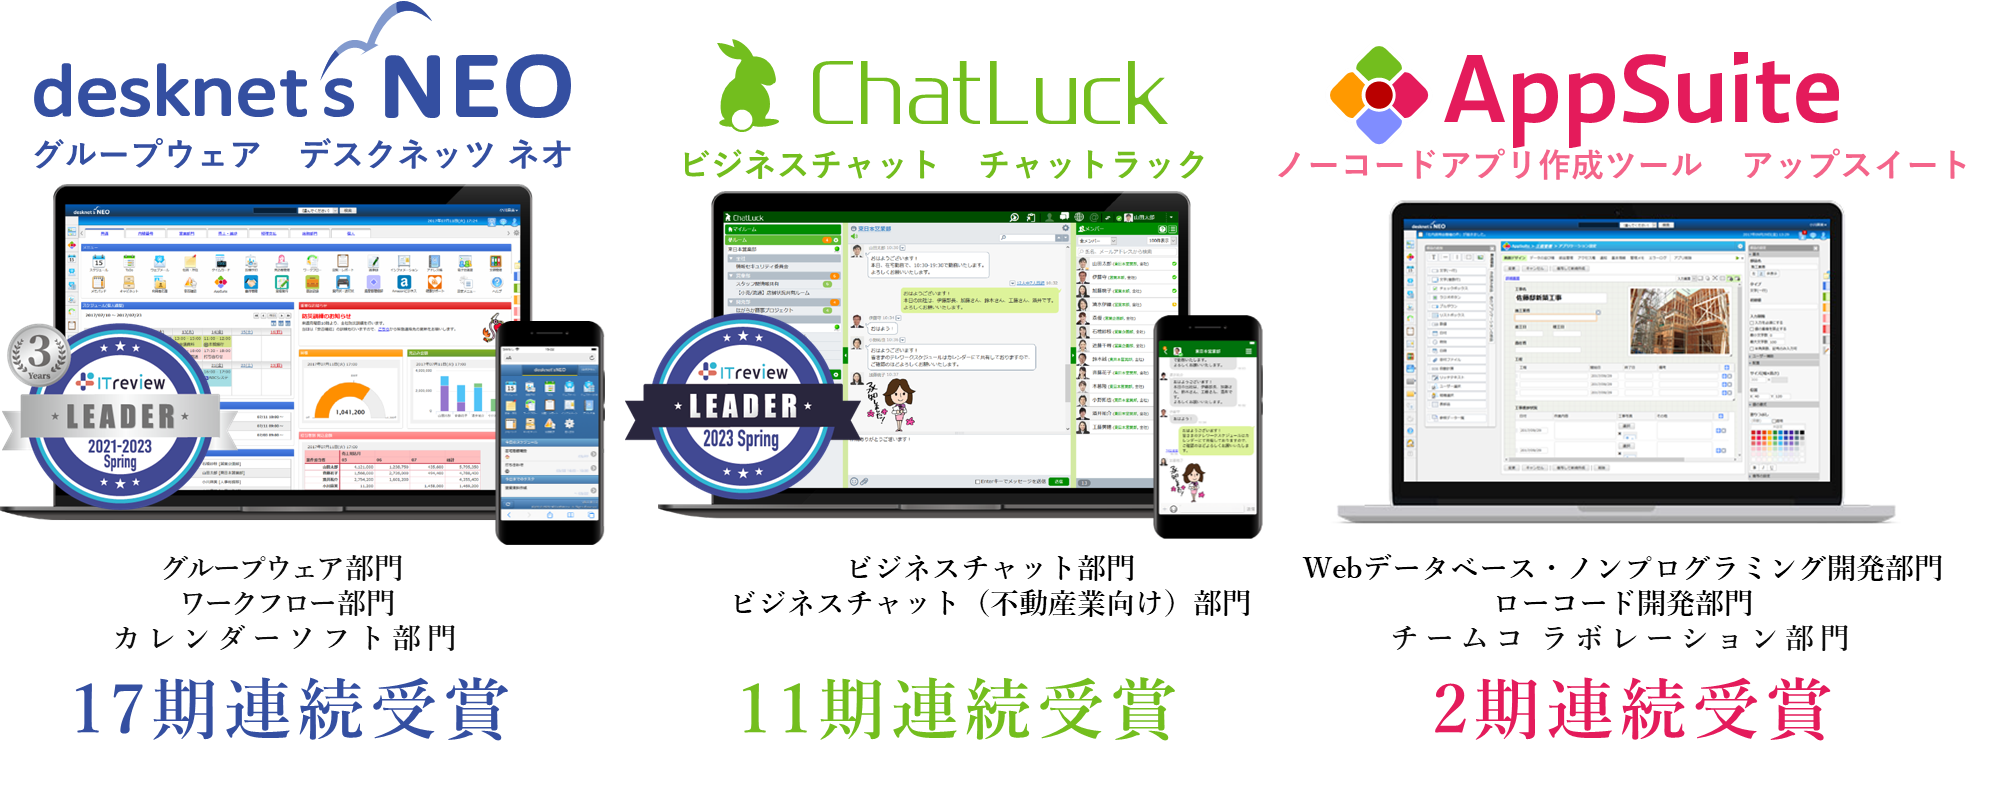 『desknet's NEO』『ChatLuck』『AppSuite』が「ITreview Grid Award 2023 Spring」を受賞